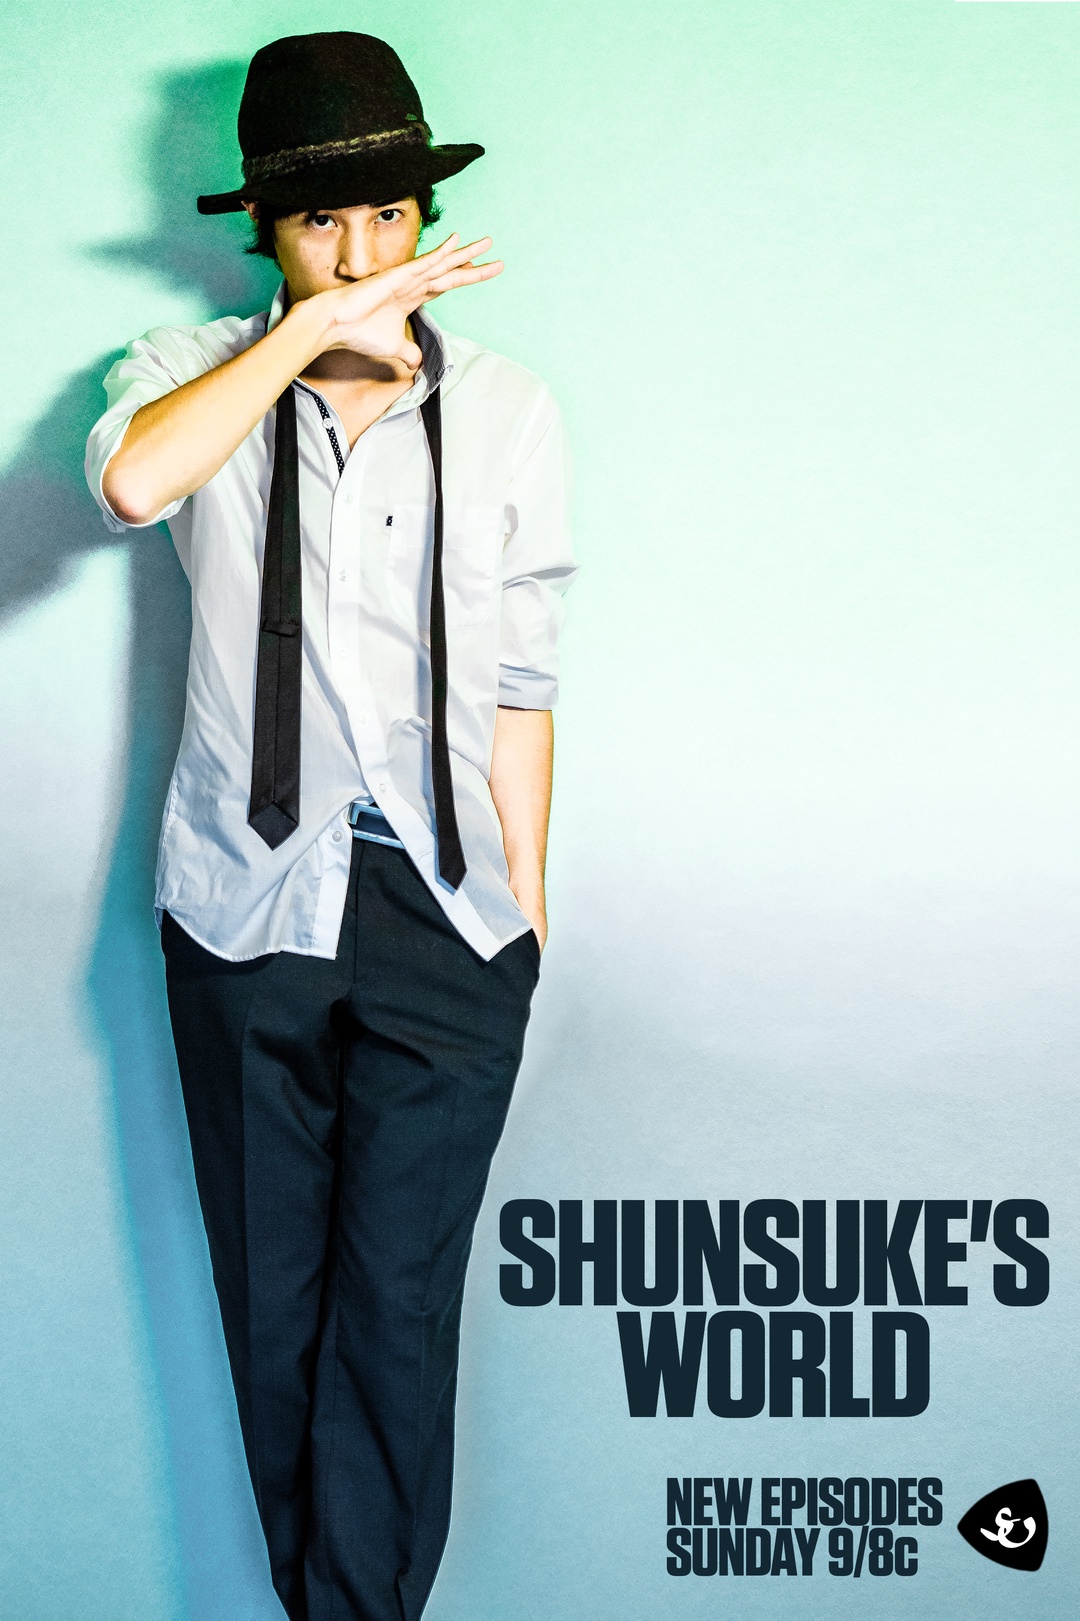 Shunsuke's World